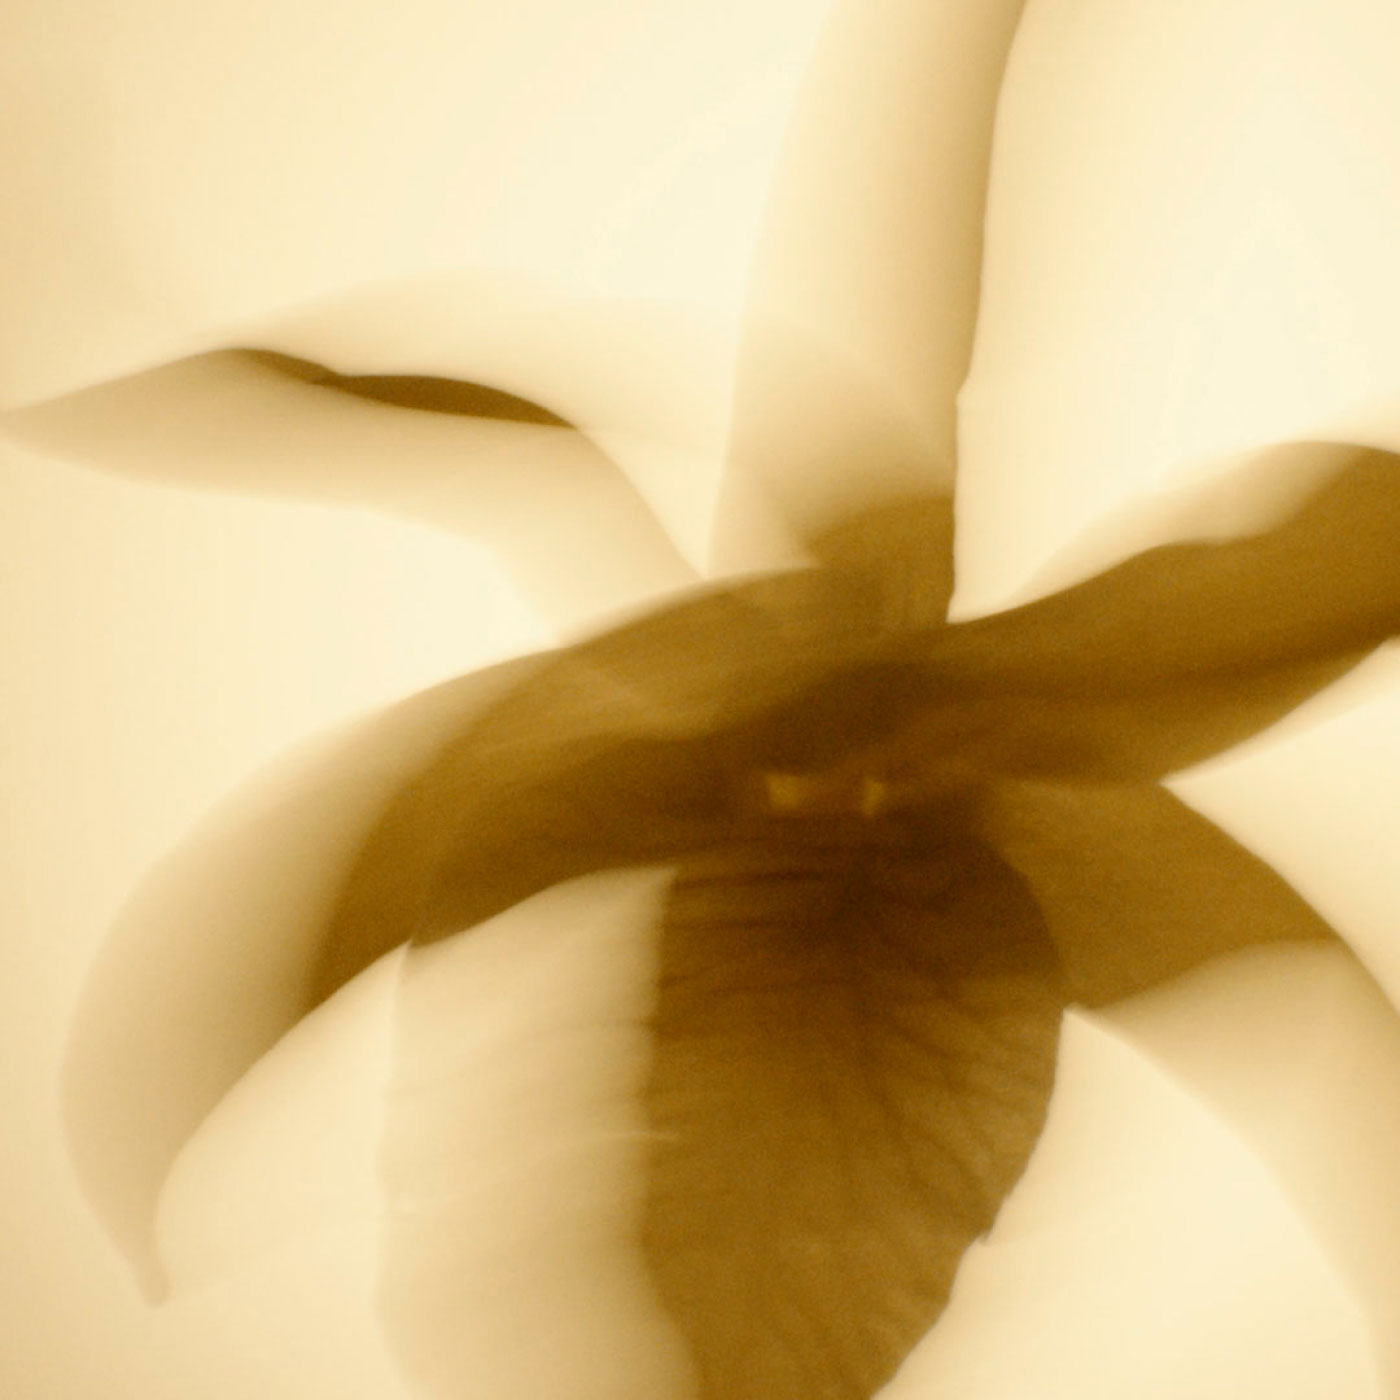 Blurred image of a large Vanilla Planifolia flower